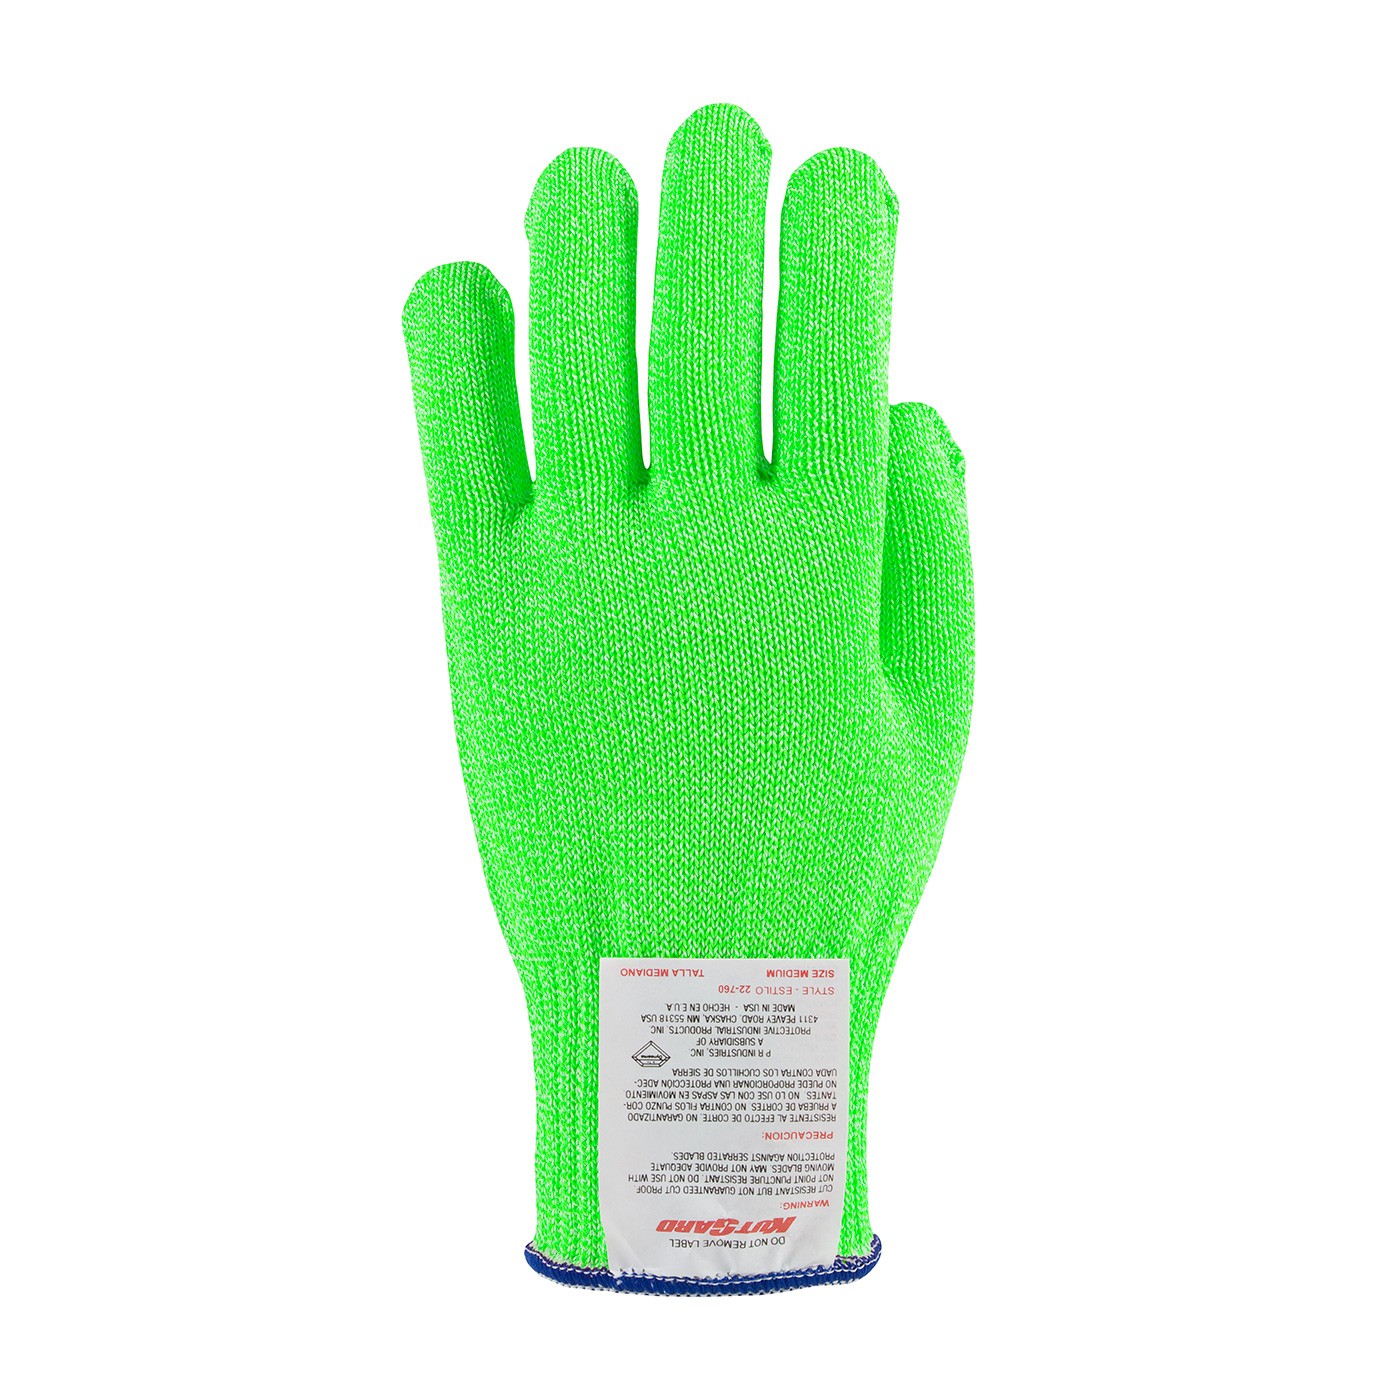 Kut Gard® Seamless Knit Dyneema® Blended Antimicrobial Glove - Medium Weight  (#22-760BG)